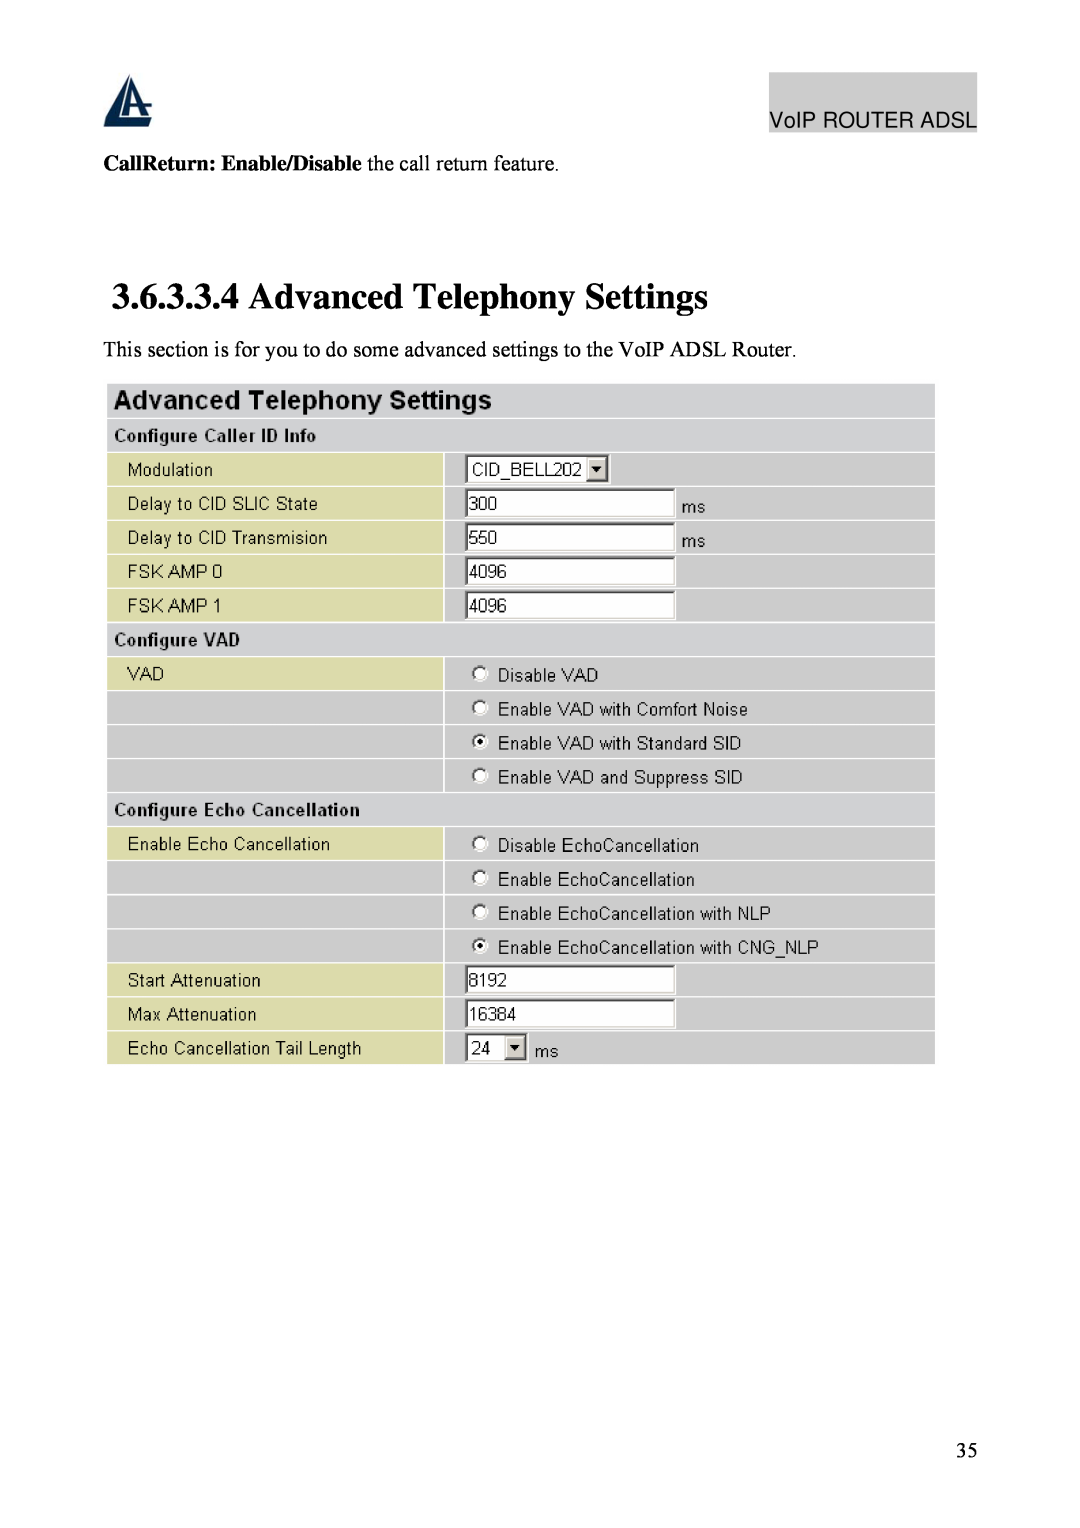 Atlantis Land A02-RAV211 Advanced Telephony Settings, CallReturn Enable/Disable the call return feature, VoIP ROUTER ADSL 